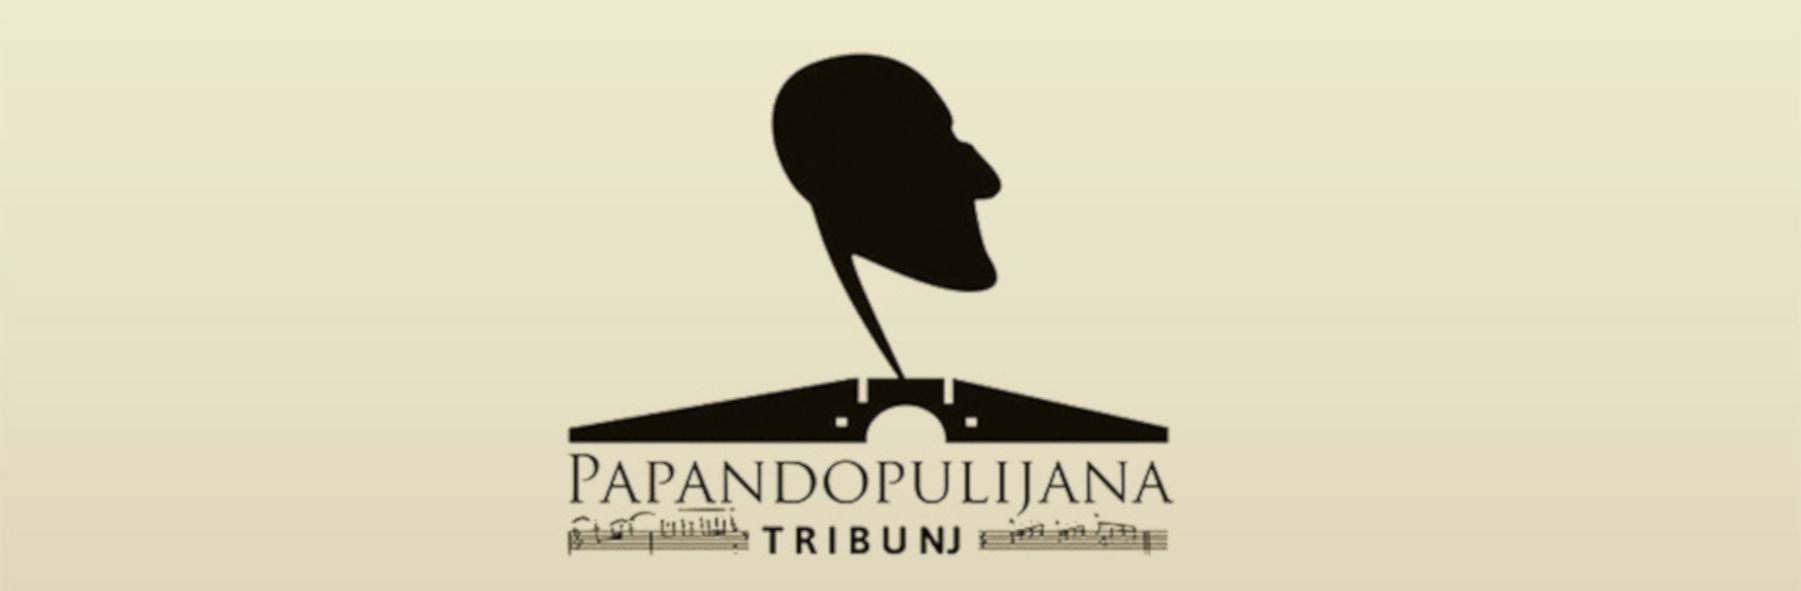 papandopulijana - logo © papandopulijana